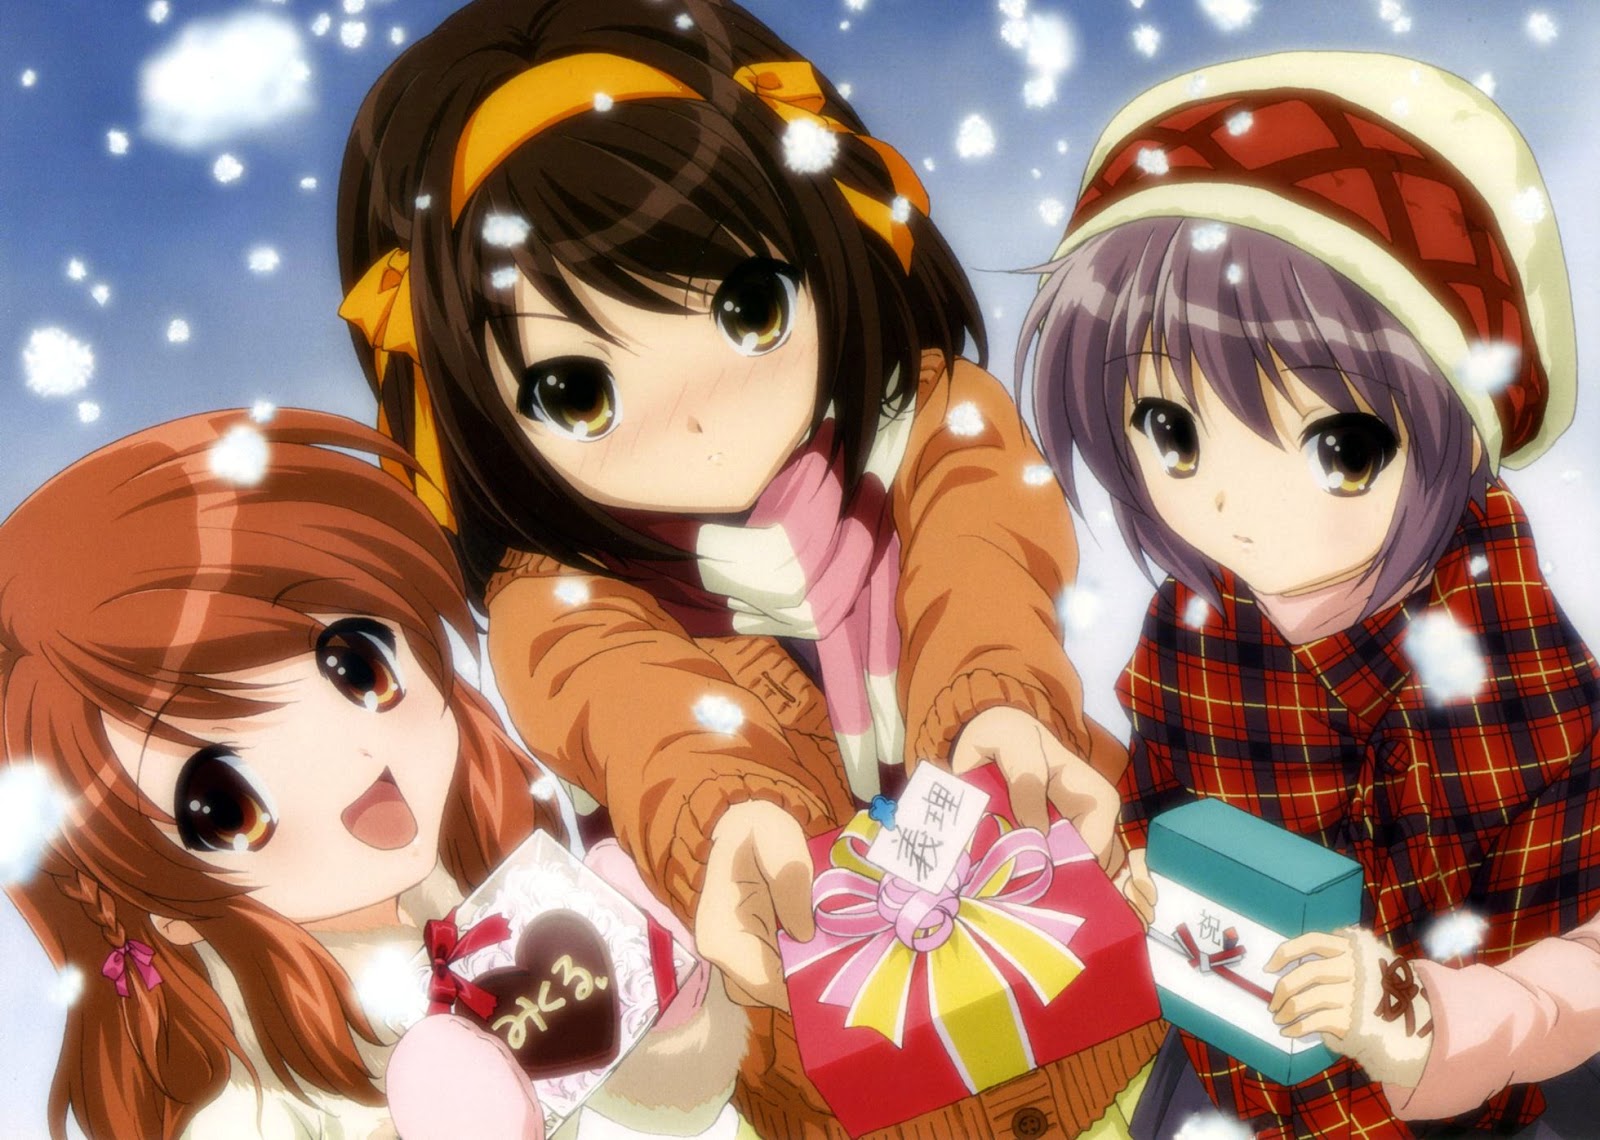 ArtStation - Christmas family time anime style